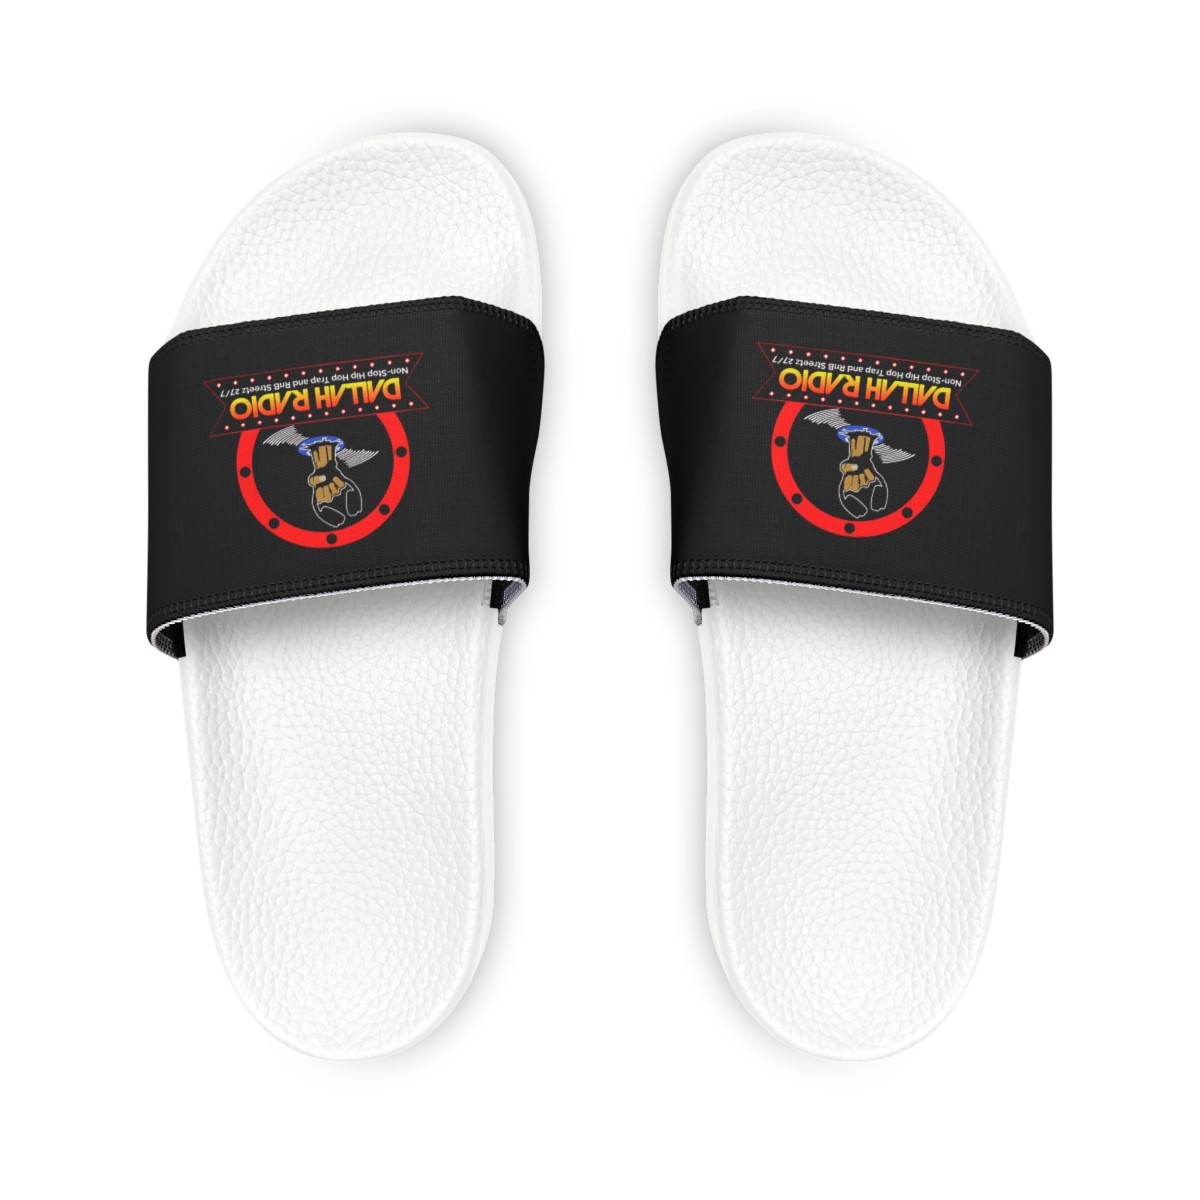 Dallah Radio Men's Black PU Slide Sandals product thumbnail image